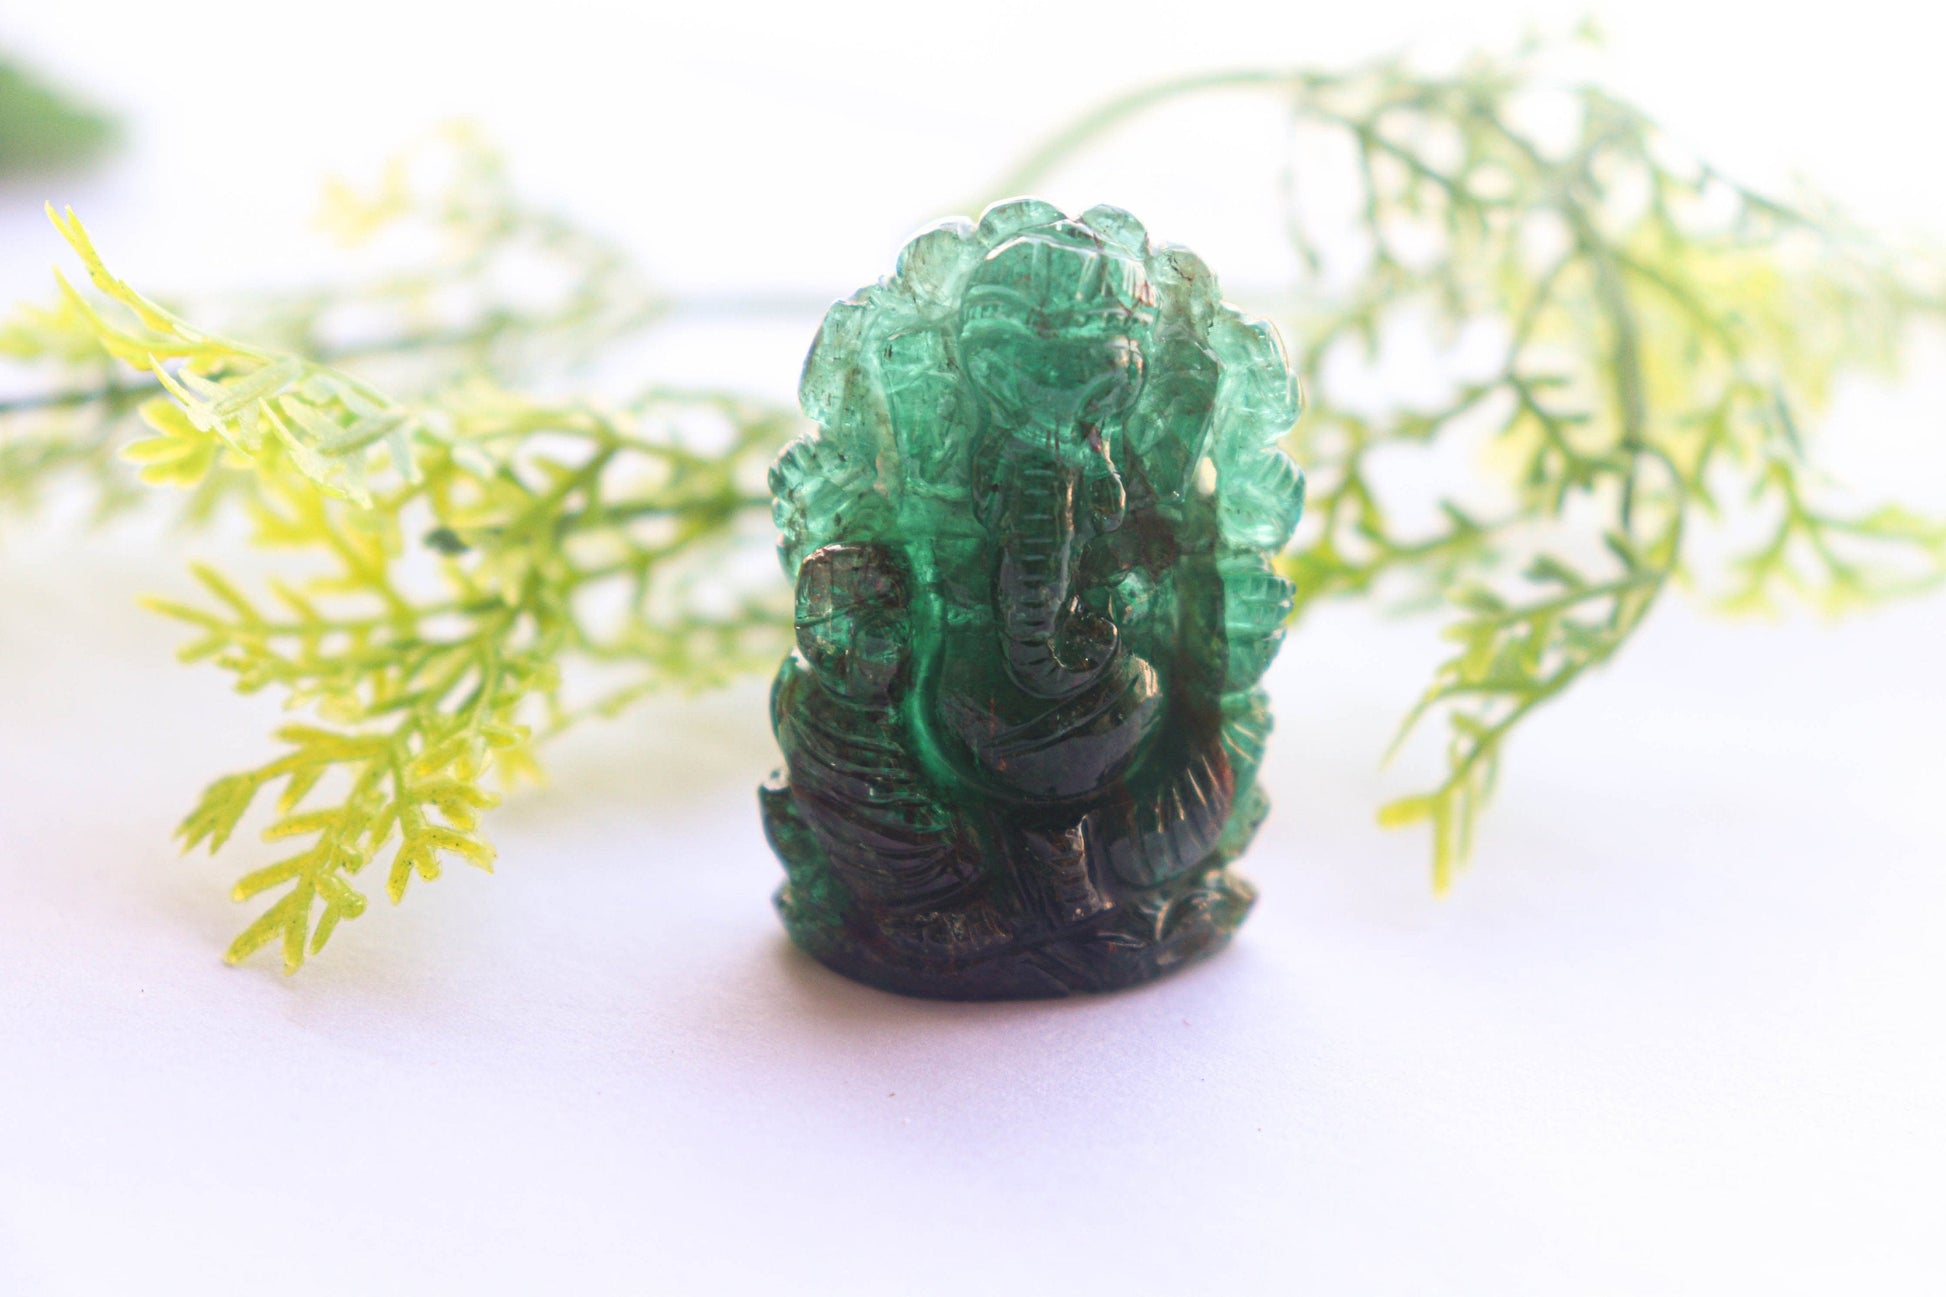 Natural Zambian Emerald Lord Ganesh | Natural Untreated Emerald | 76 Carats Beadsforyourjewelry